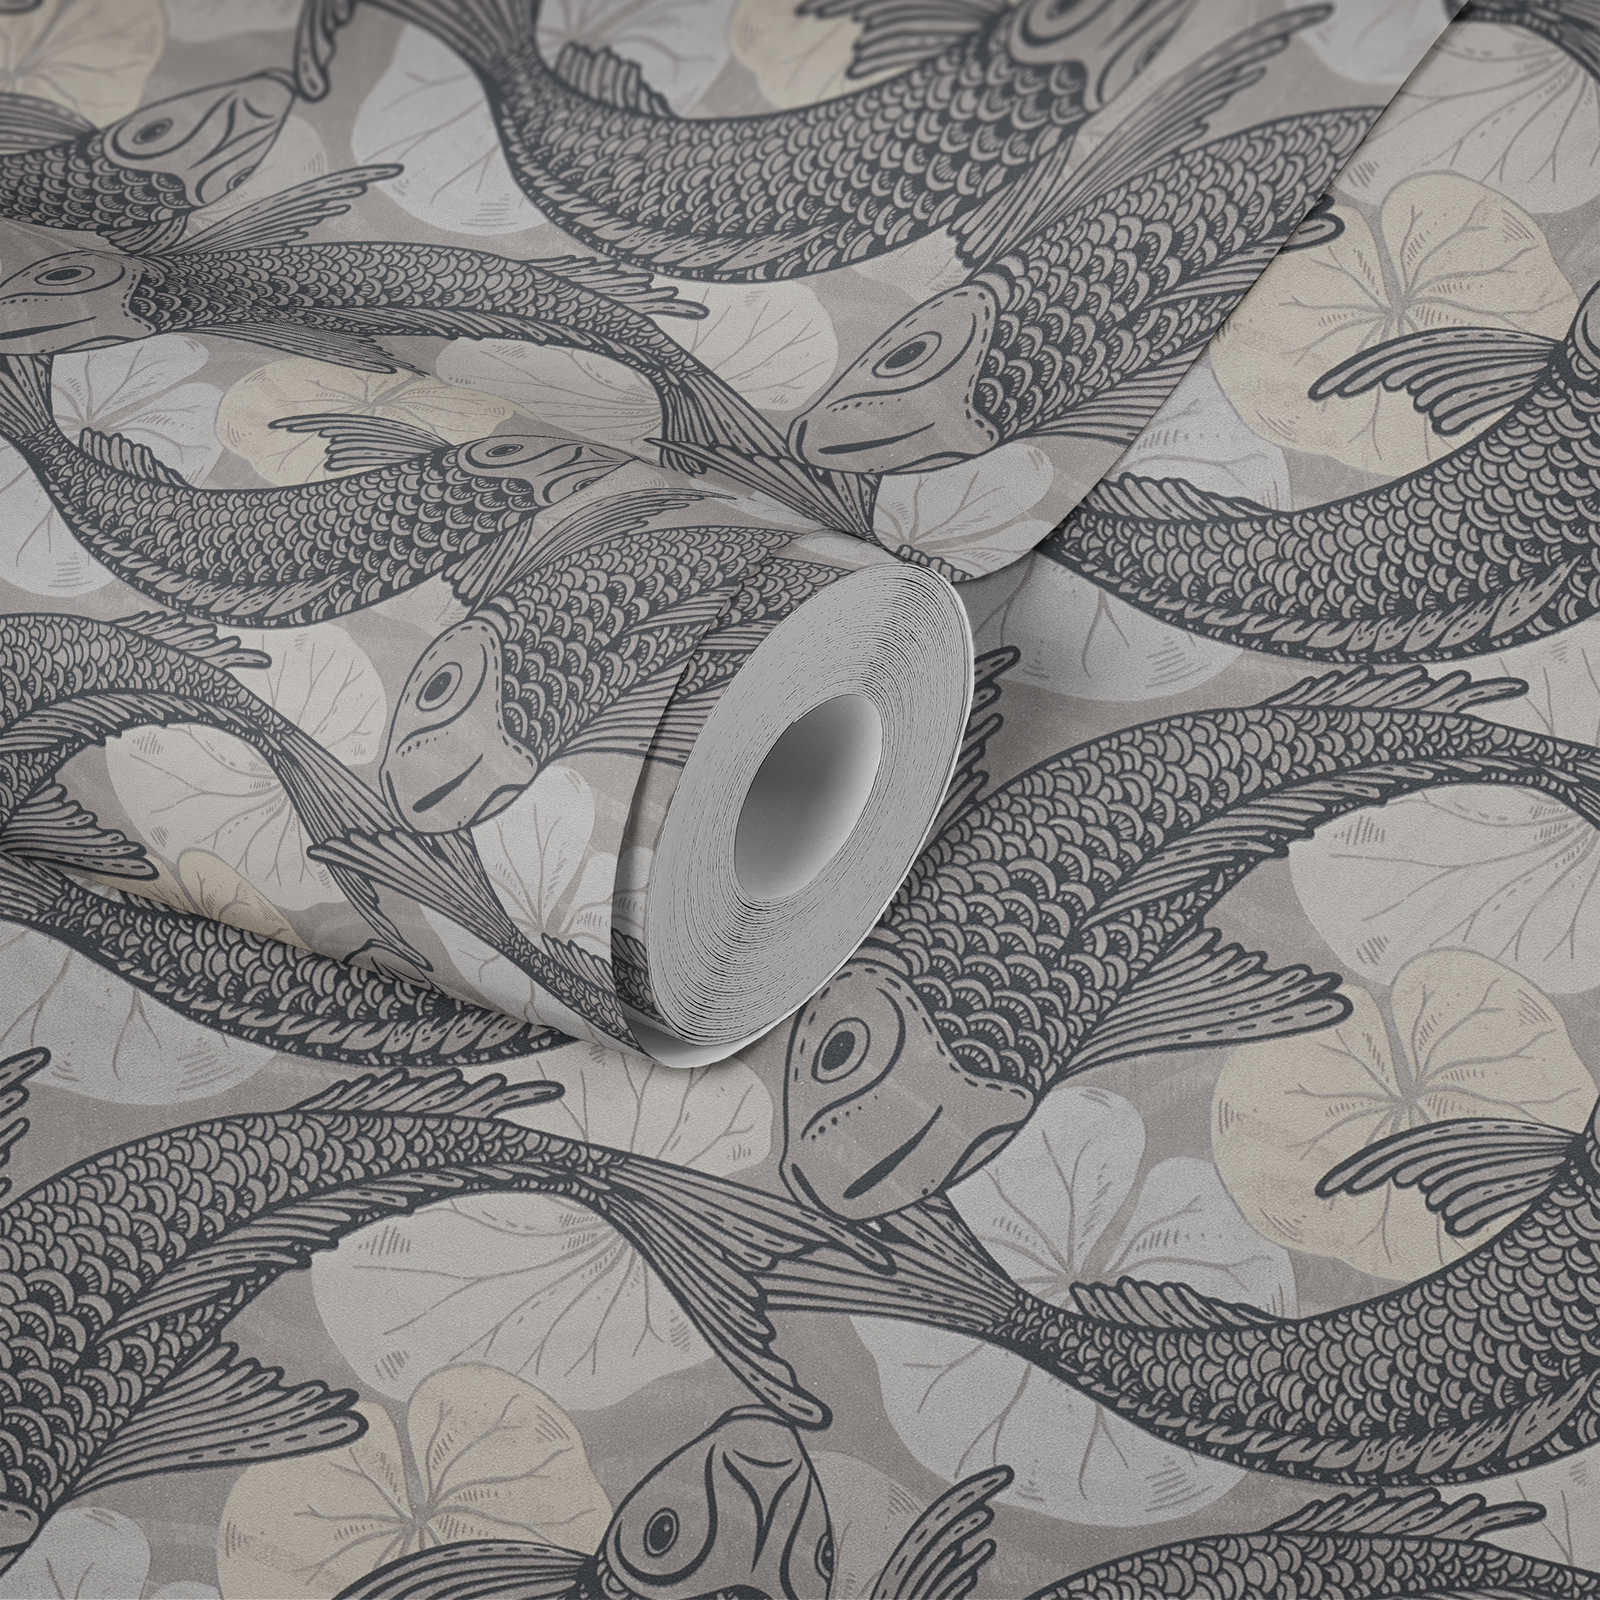             Tapete Asian Design mit Koi Motiv & Metallic-Effekt – Beige, Grau, Schwarz
        